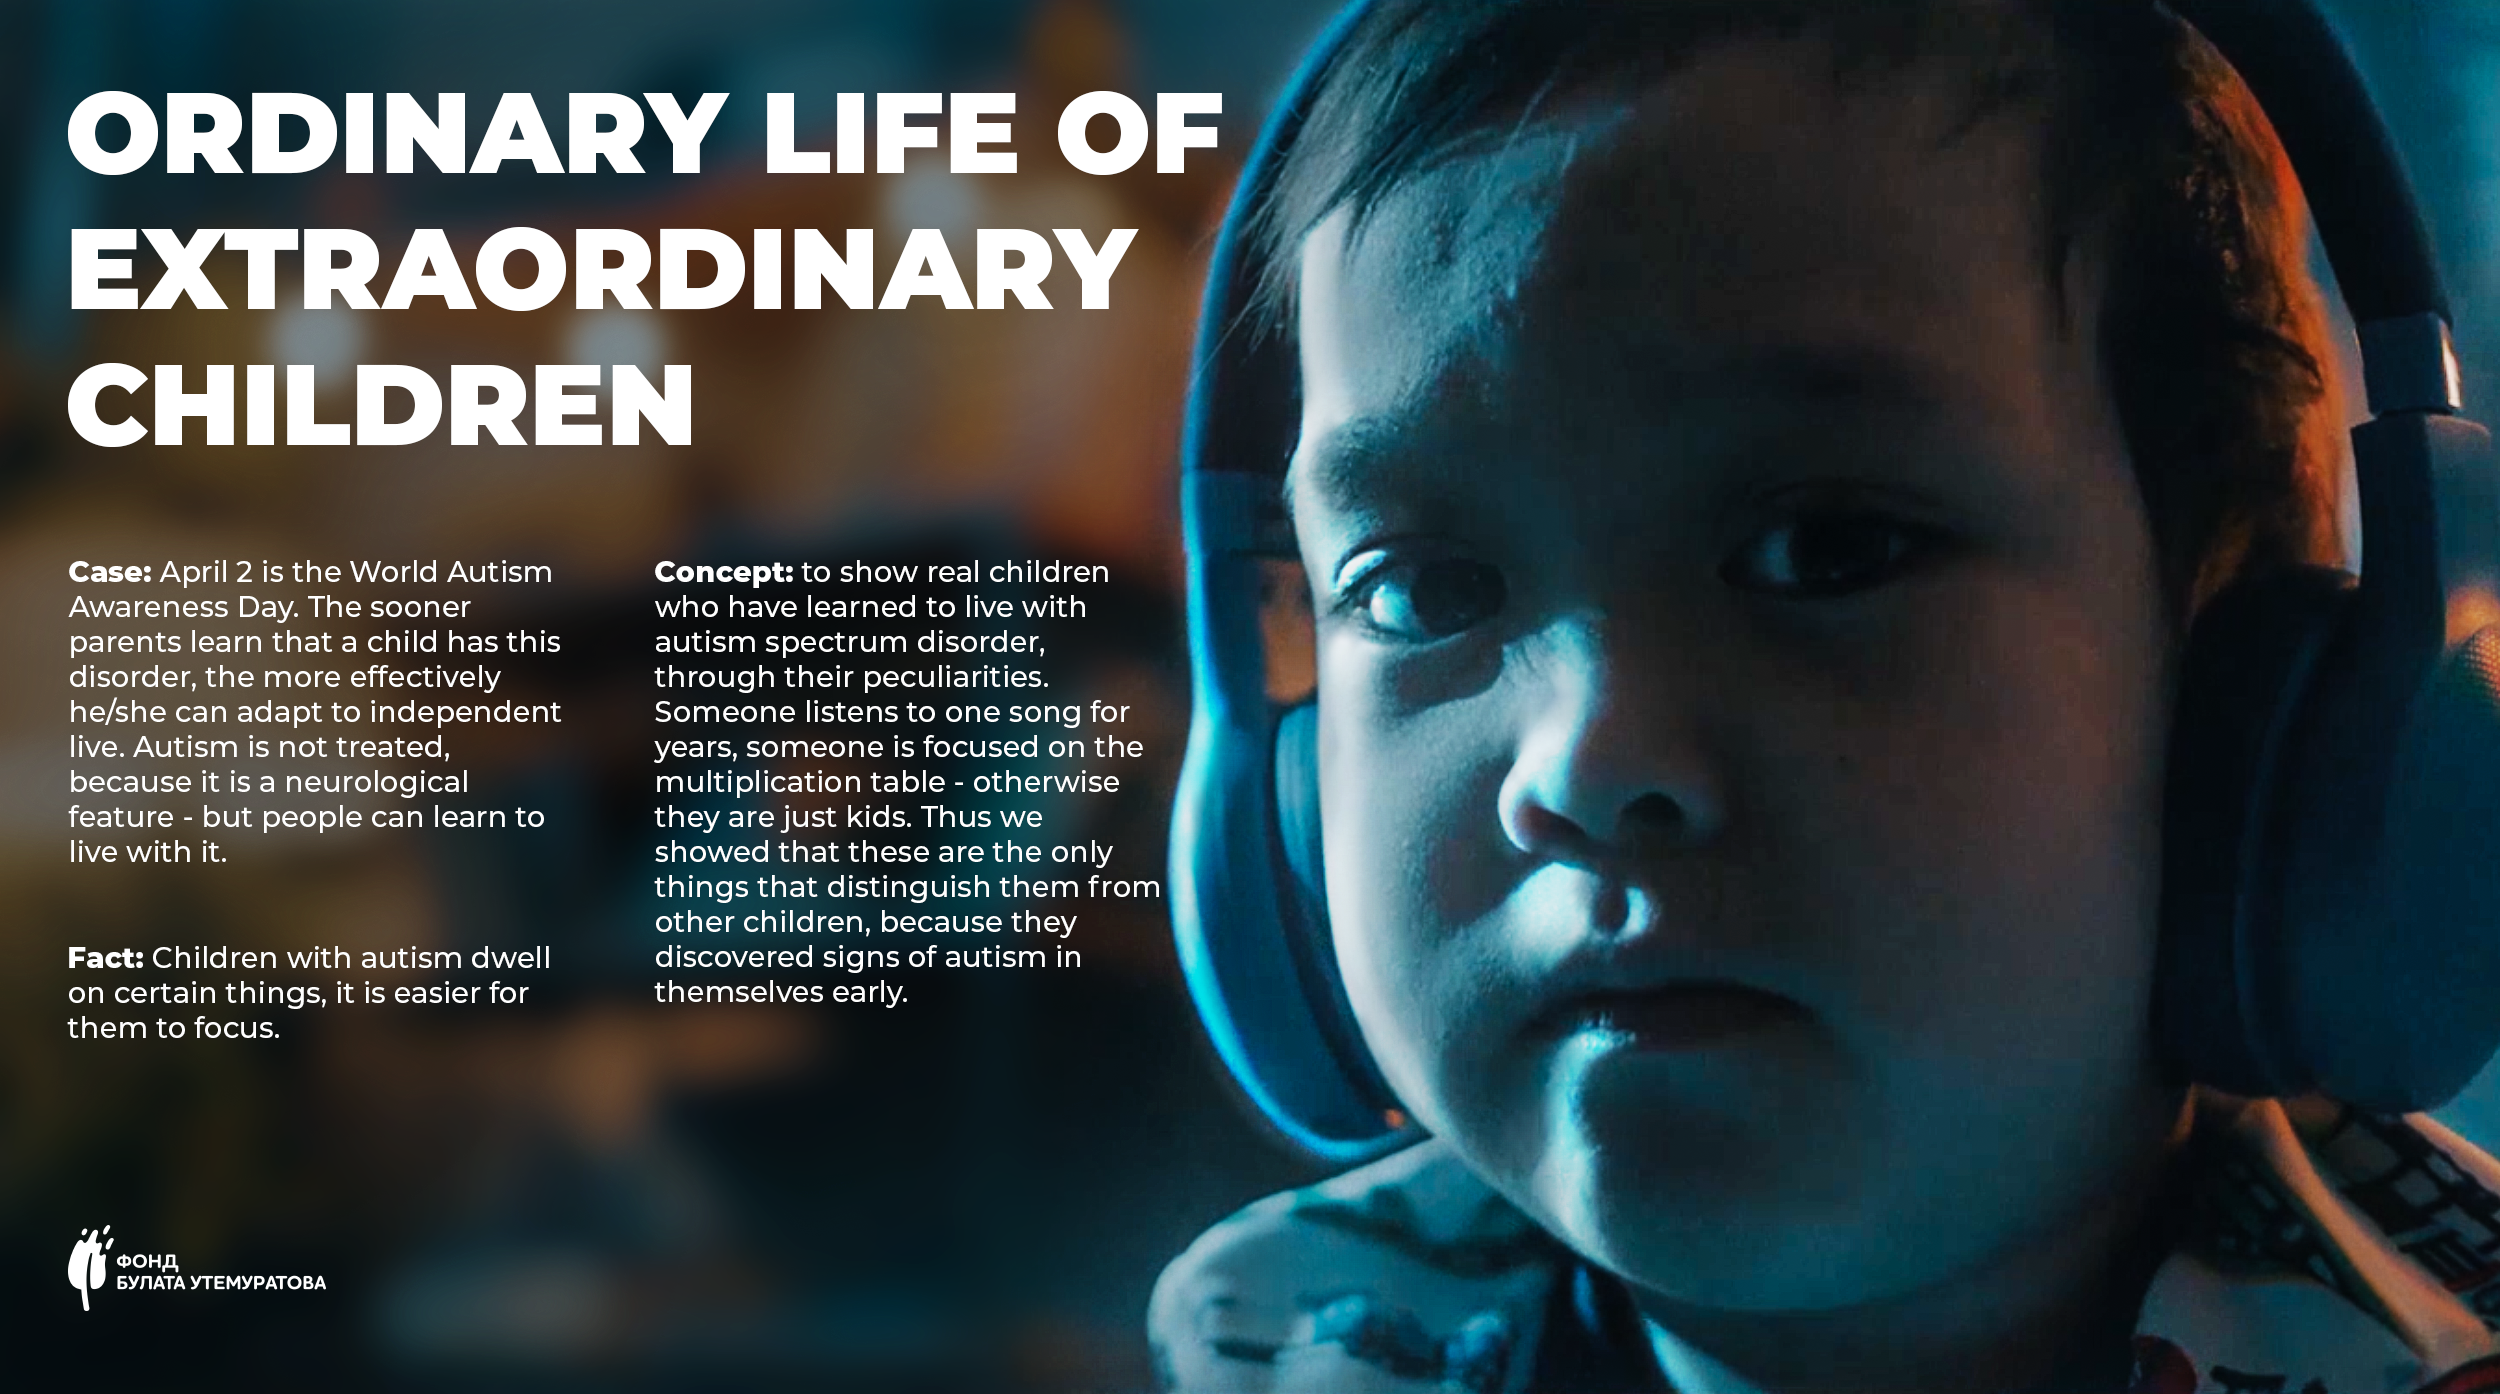 Ordinary life of extraordinary children